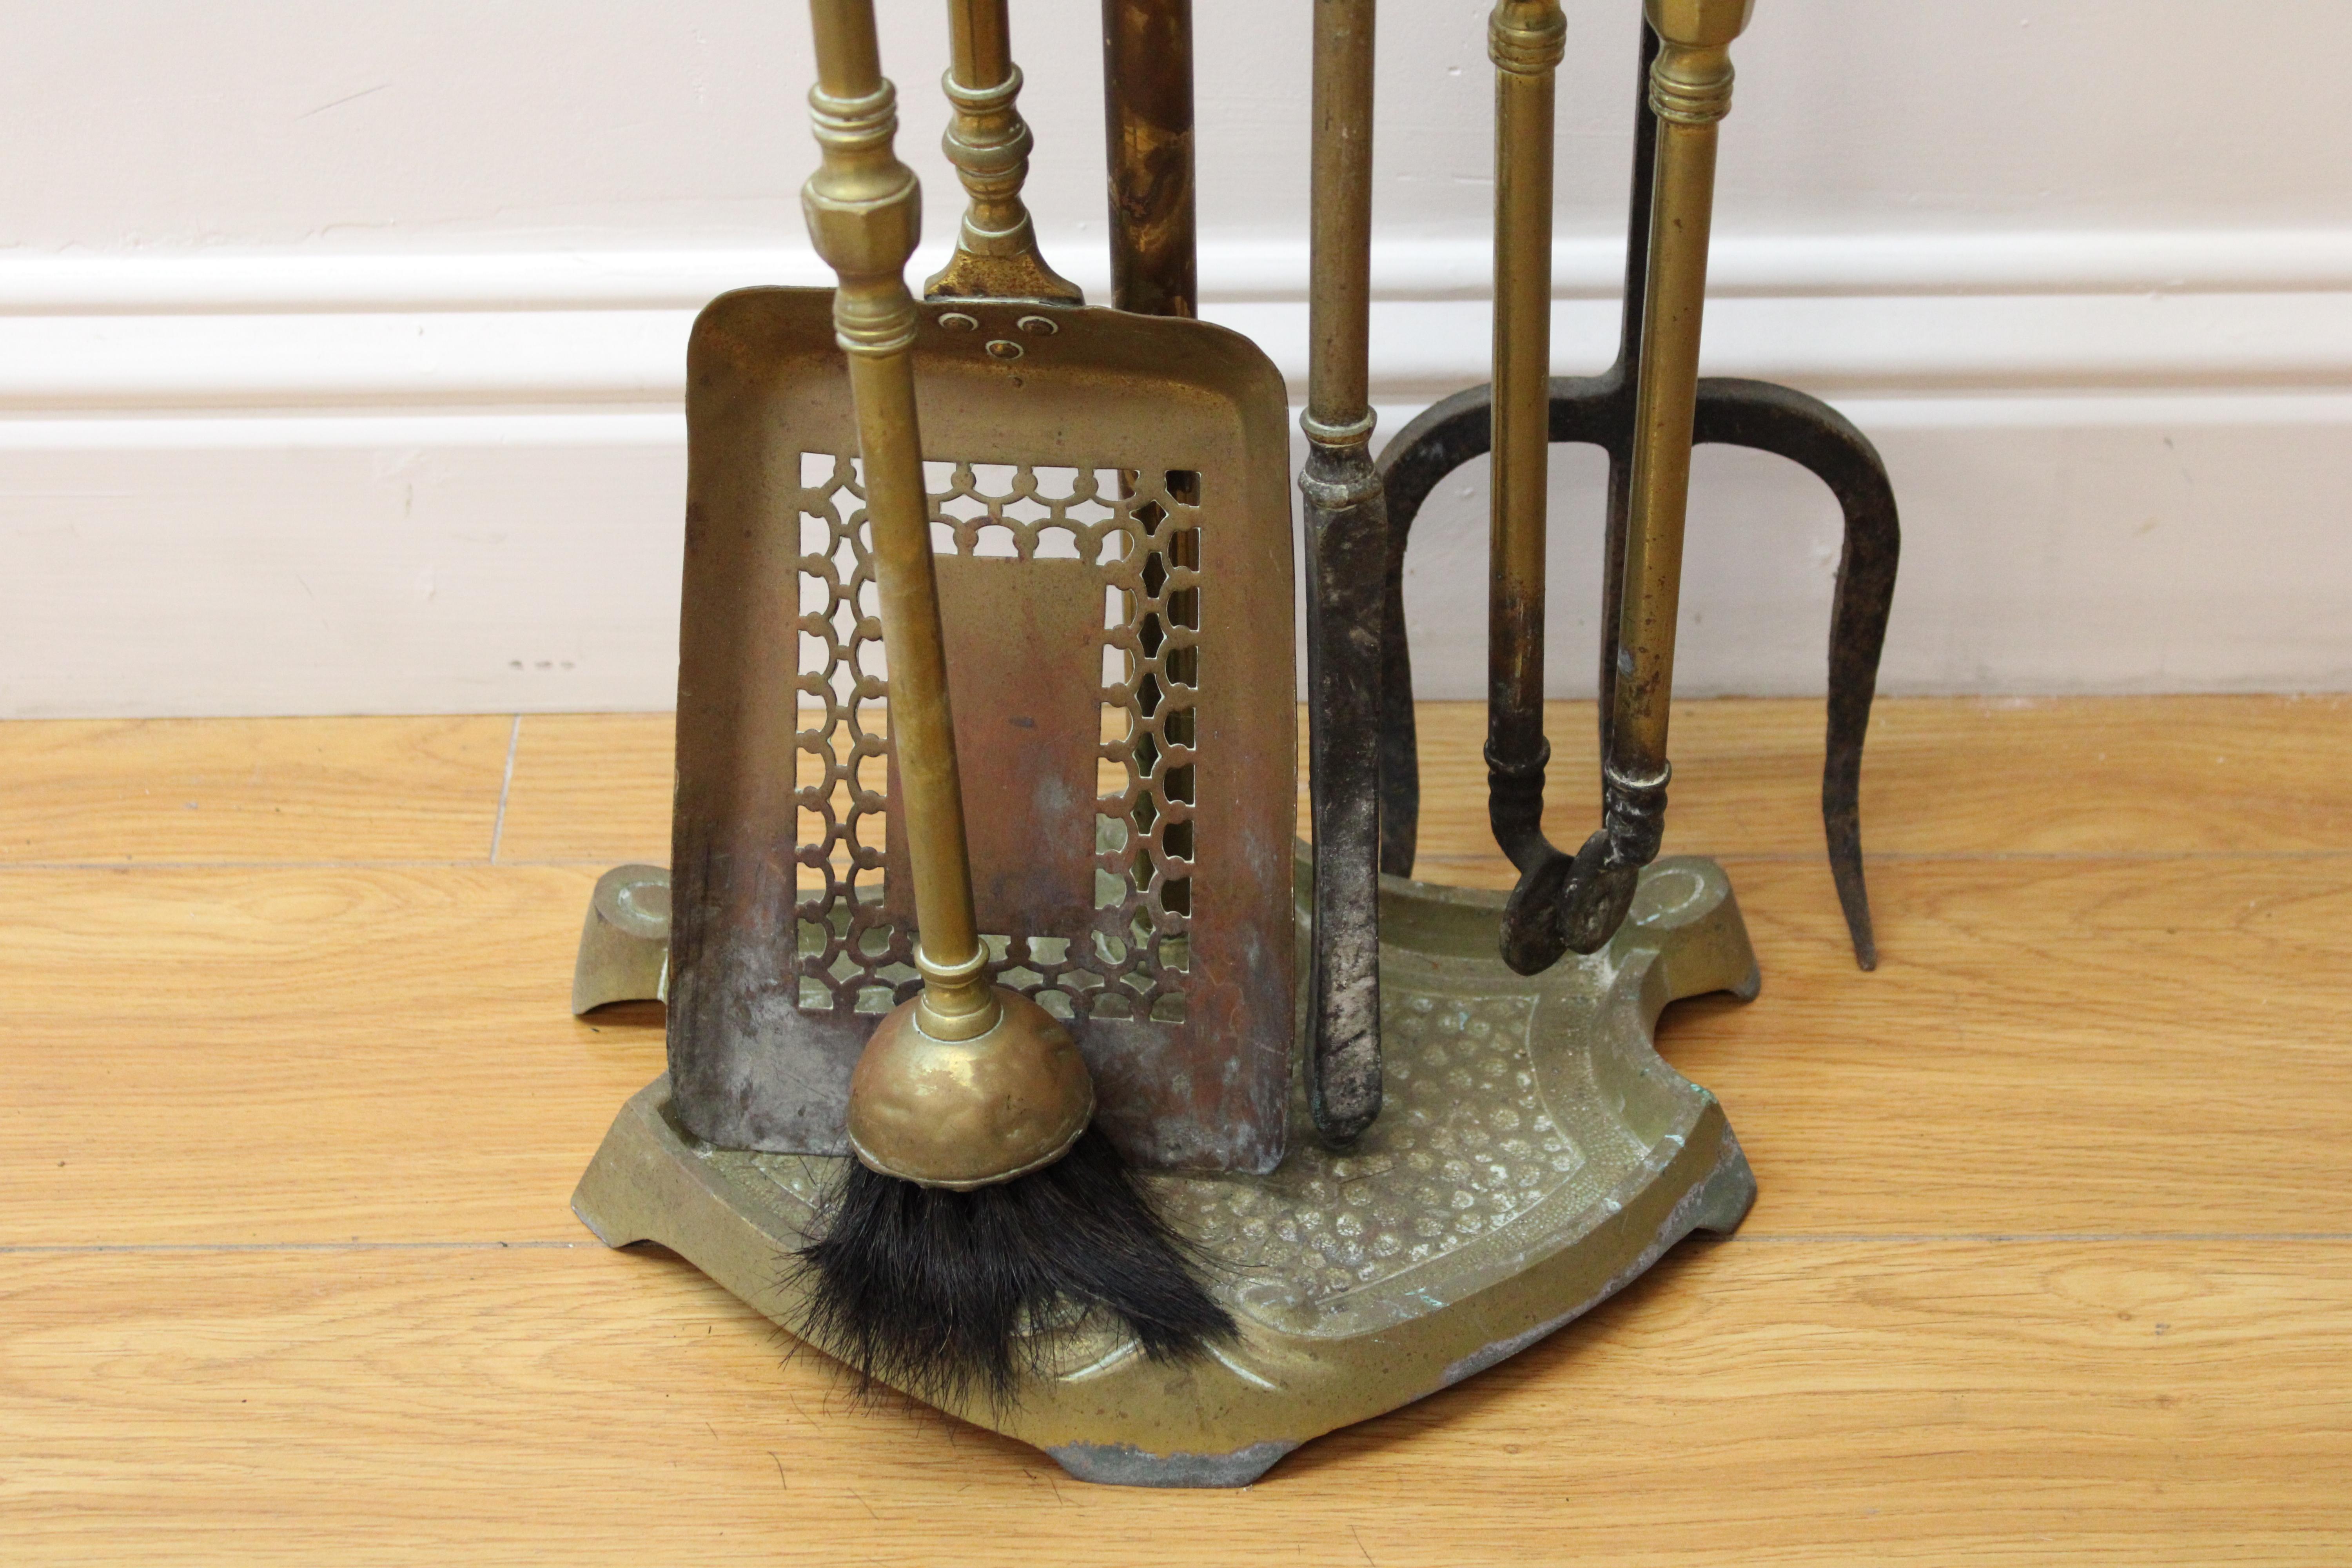 C. 20th Century

4 Piece brass fireplace tool set.